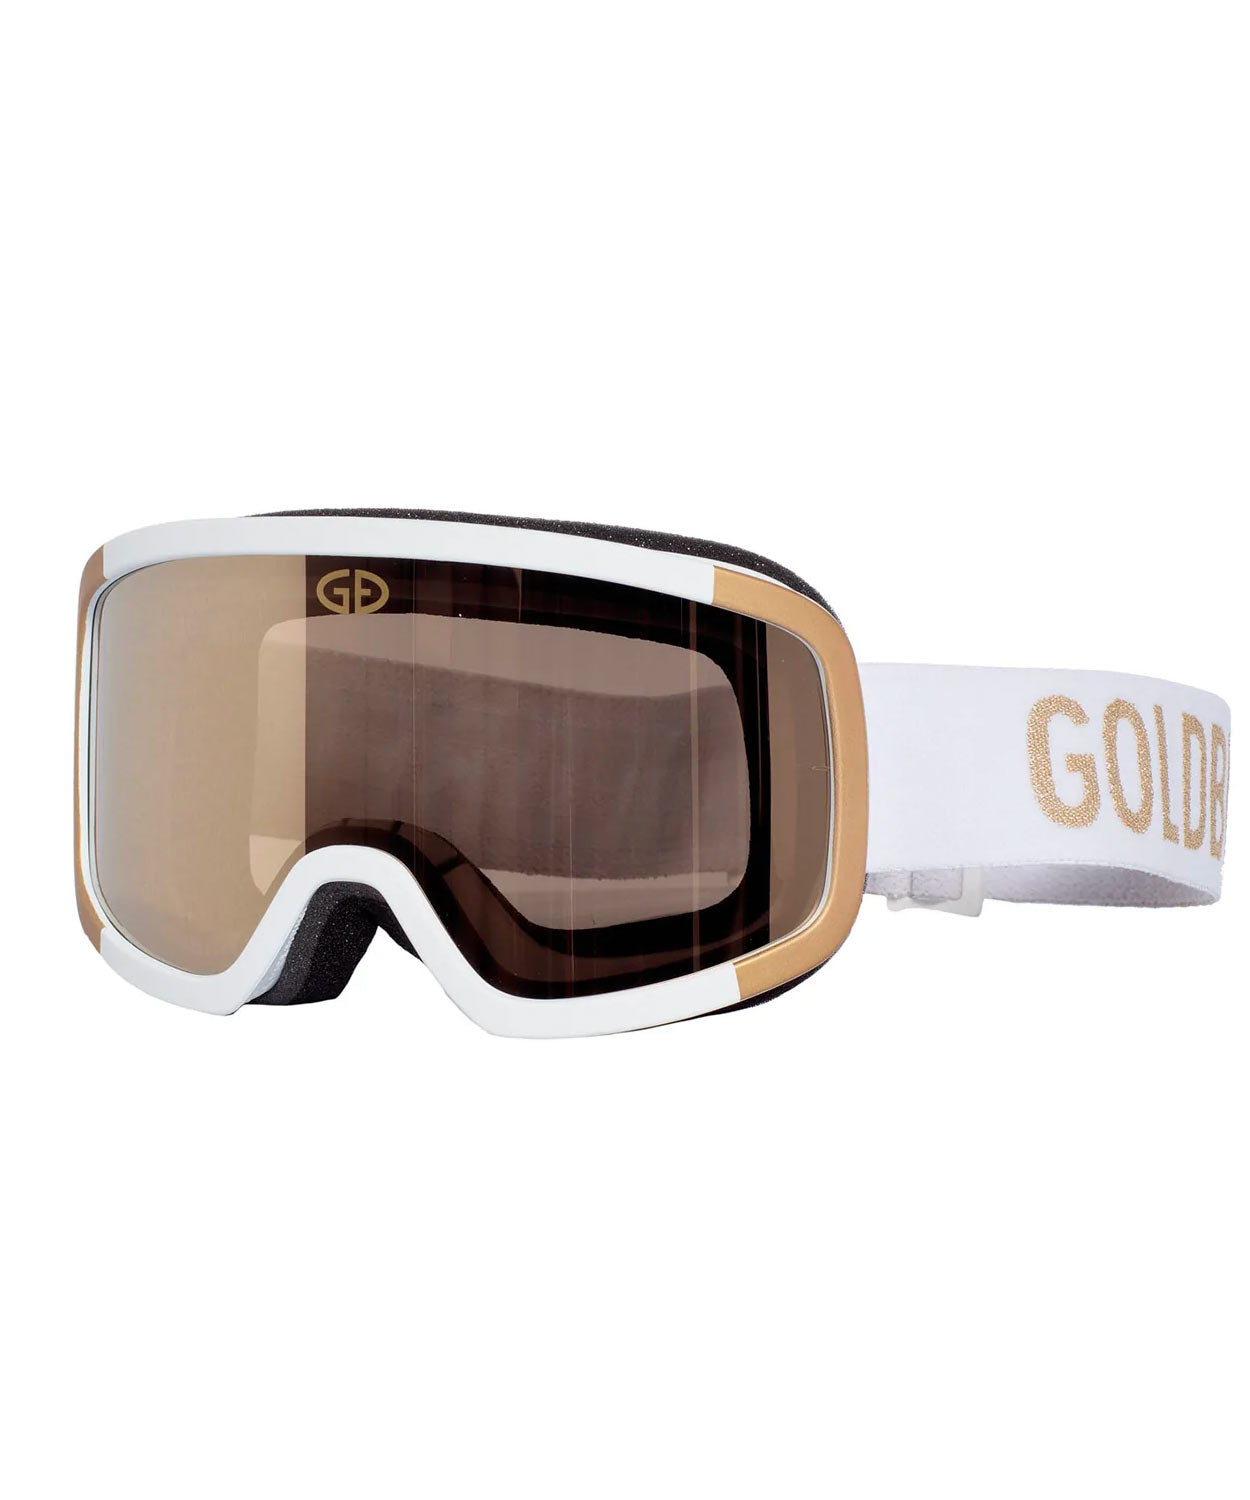 Eyecatcher Single Lens Goggle Ski Goggles Goldbergh White/Gold OS 